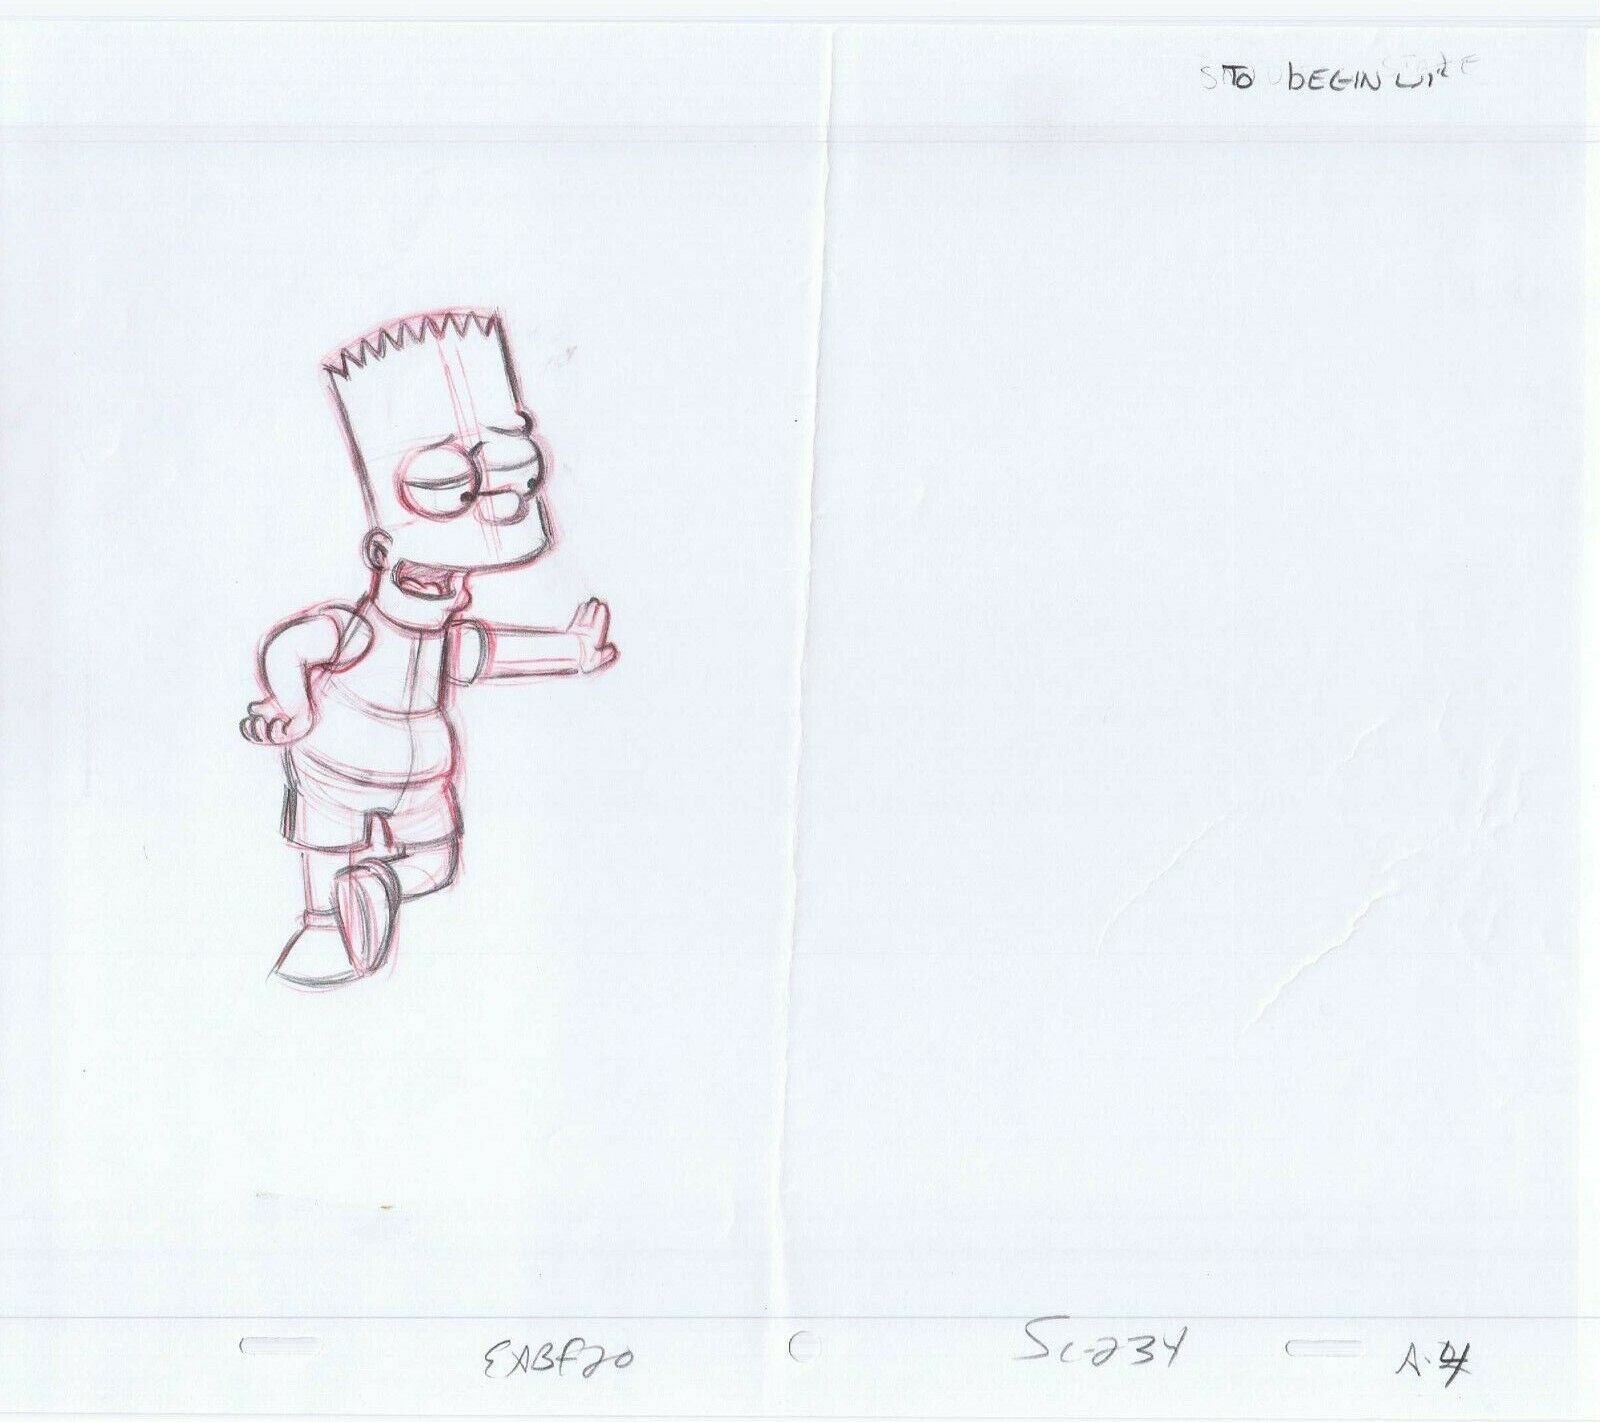 Simpsons Bart Original Art Animation Production Pencils EABF20 SC-234 A.4